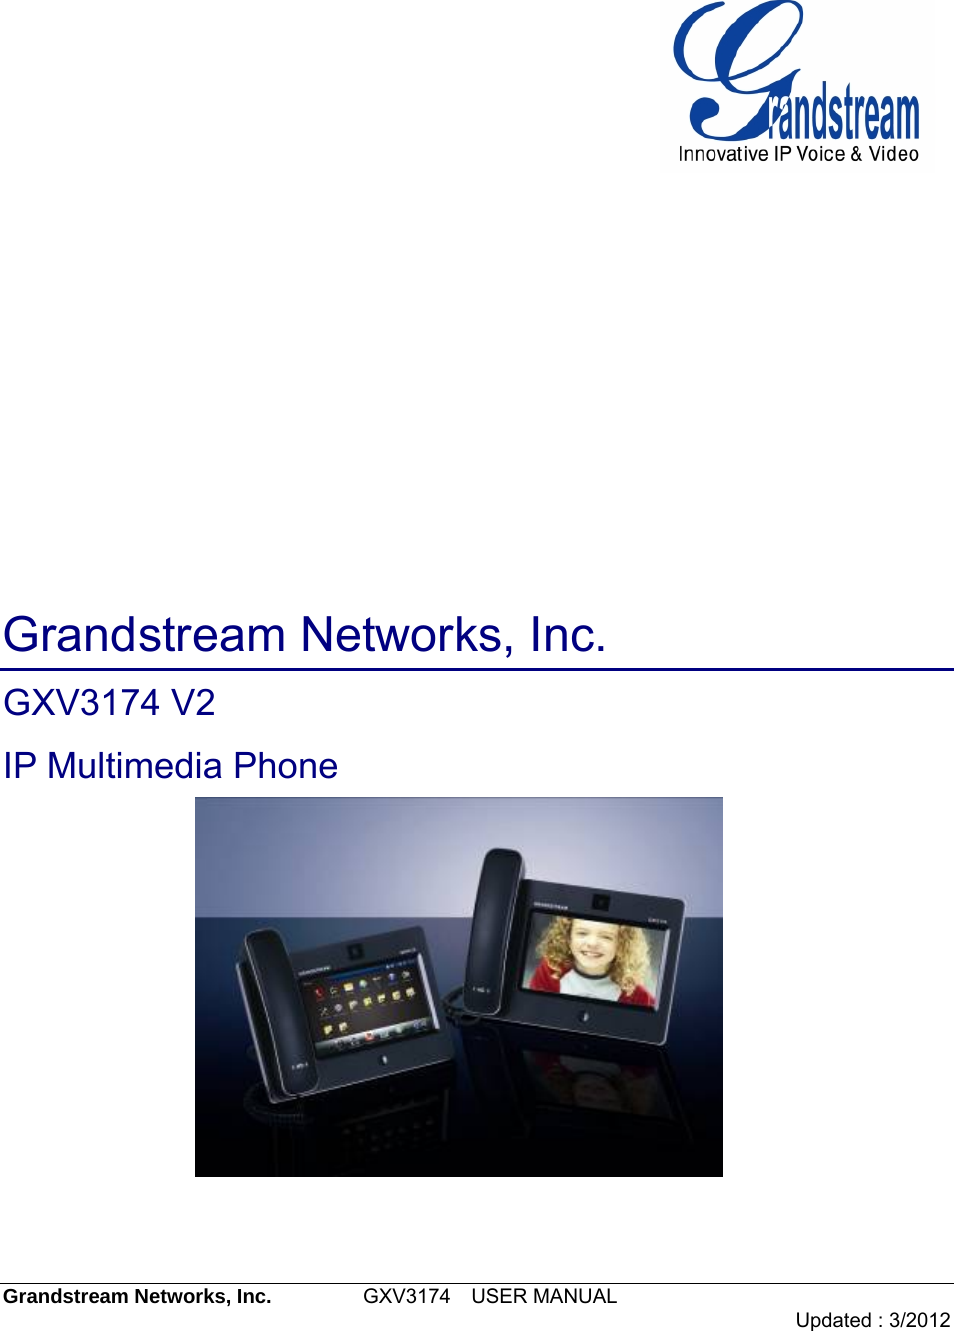  Grandstream Networks, Inc.         GXV3174  USER MANUAL                                    Updated : 3/2012                 Grandstream Networks, Inc. GXV3174 V2 IP Multimedia Phone 